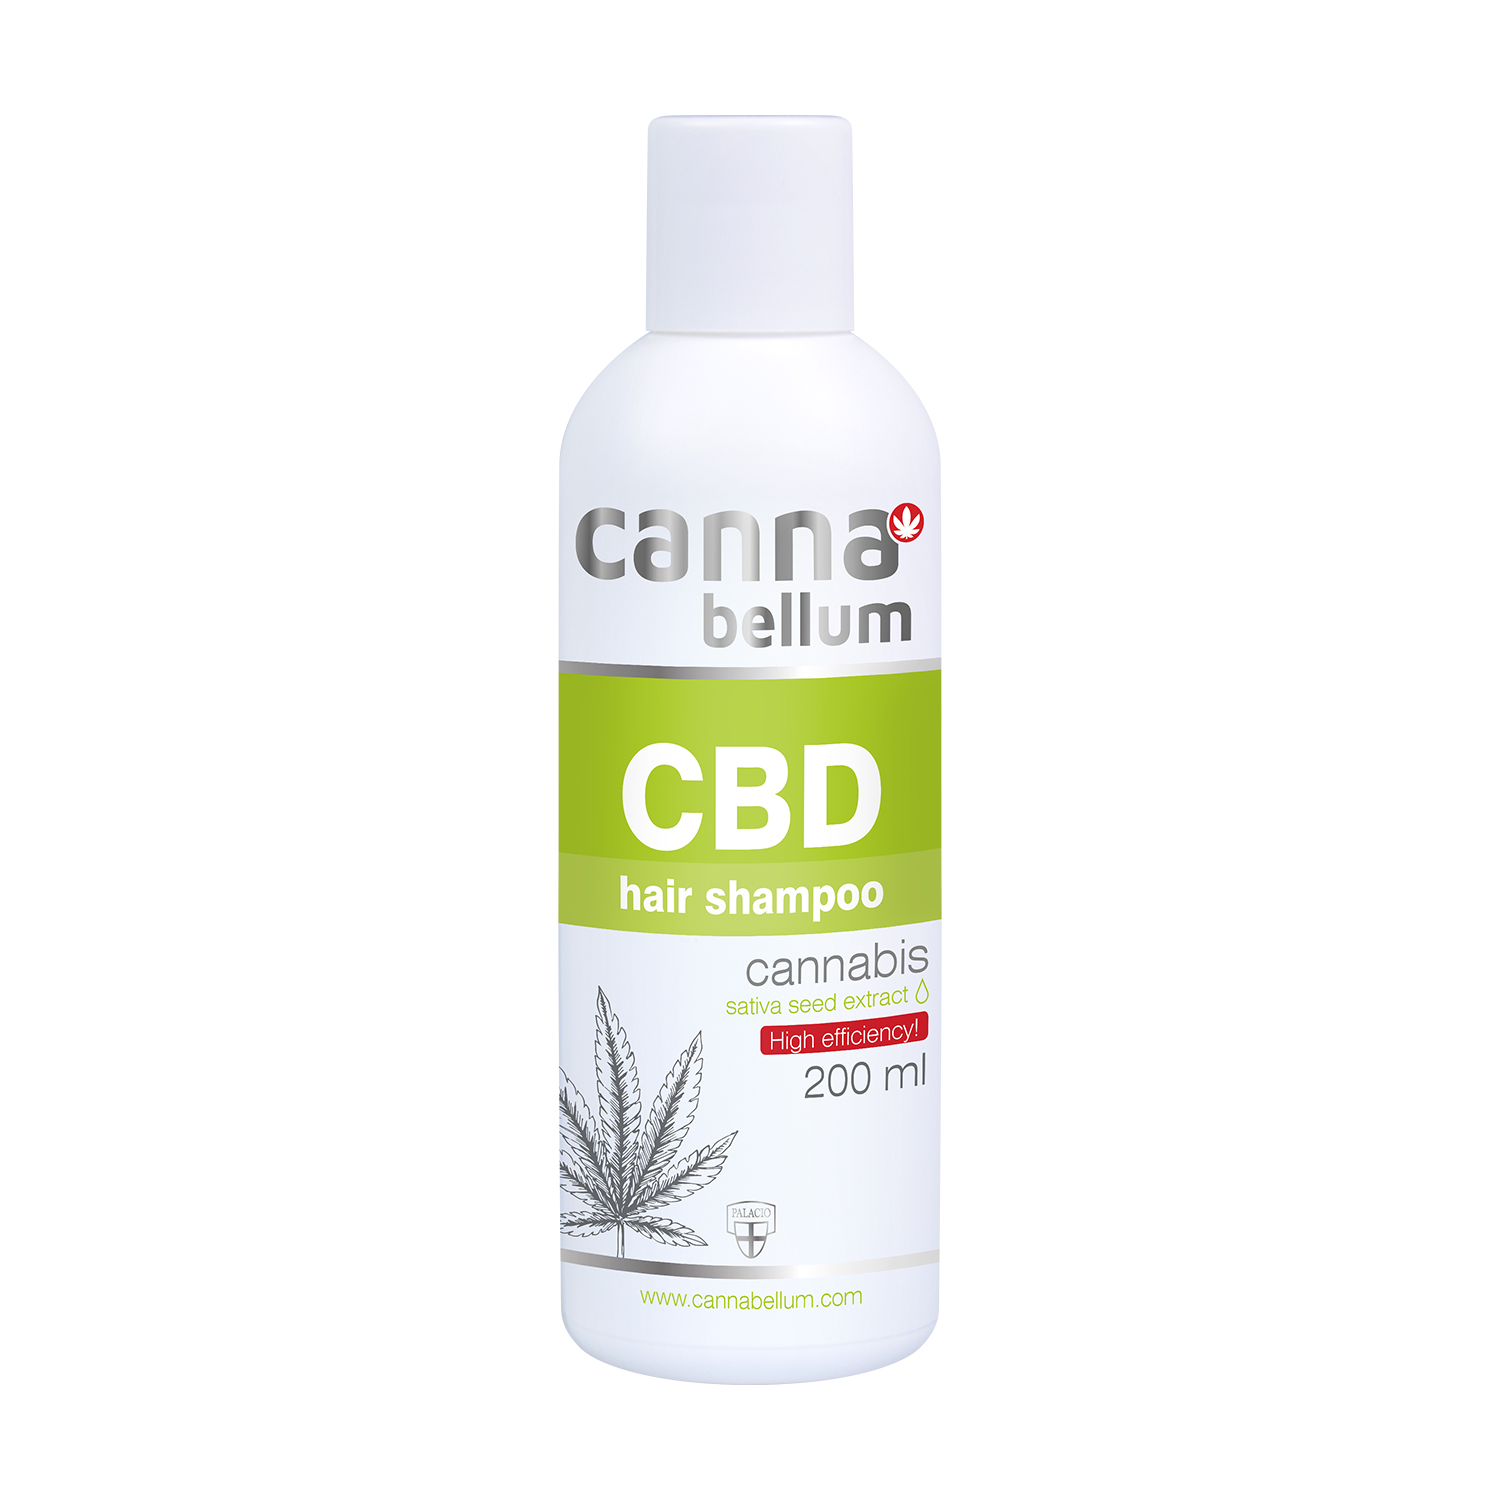 Cannabellum CBD hair shampoo 200ml P1251 WEB 55